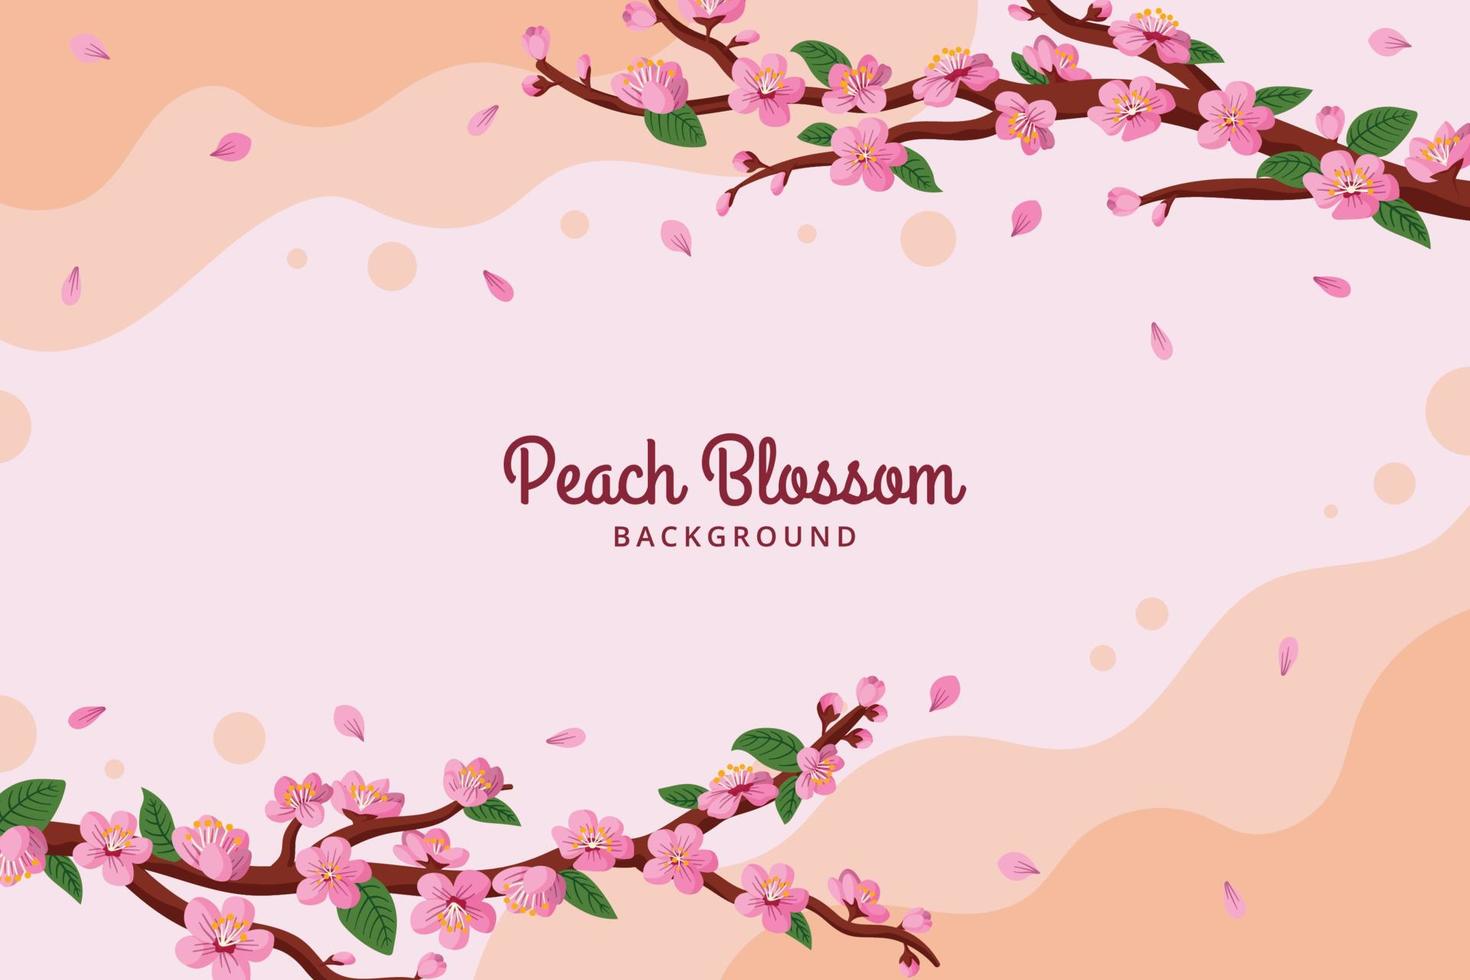 persika blomma bakgrund mall vektor